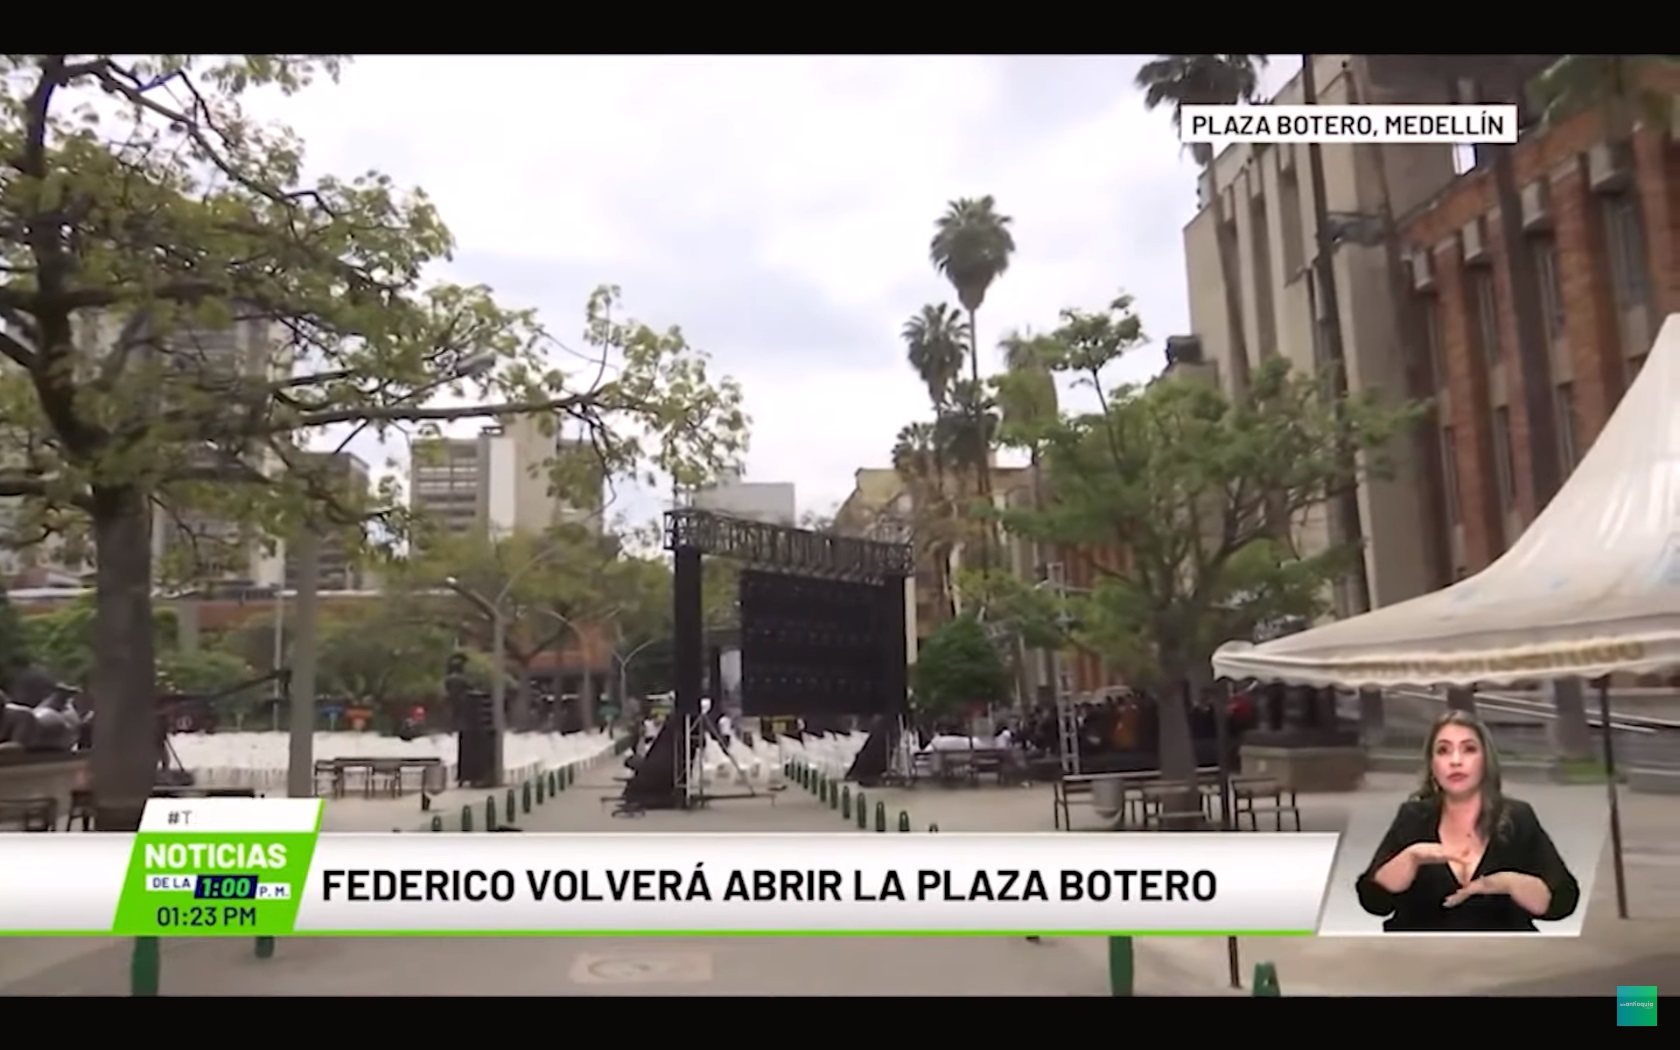 Federico volverá abrir la Plaza Botero